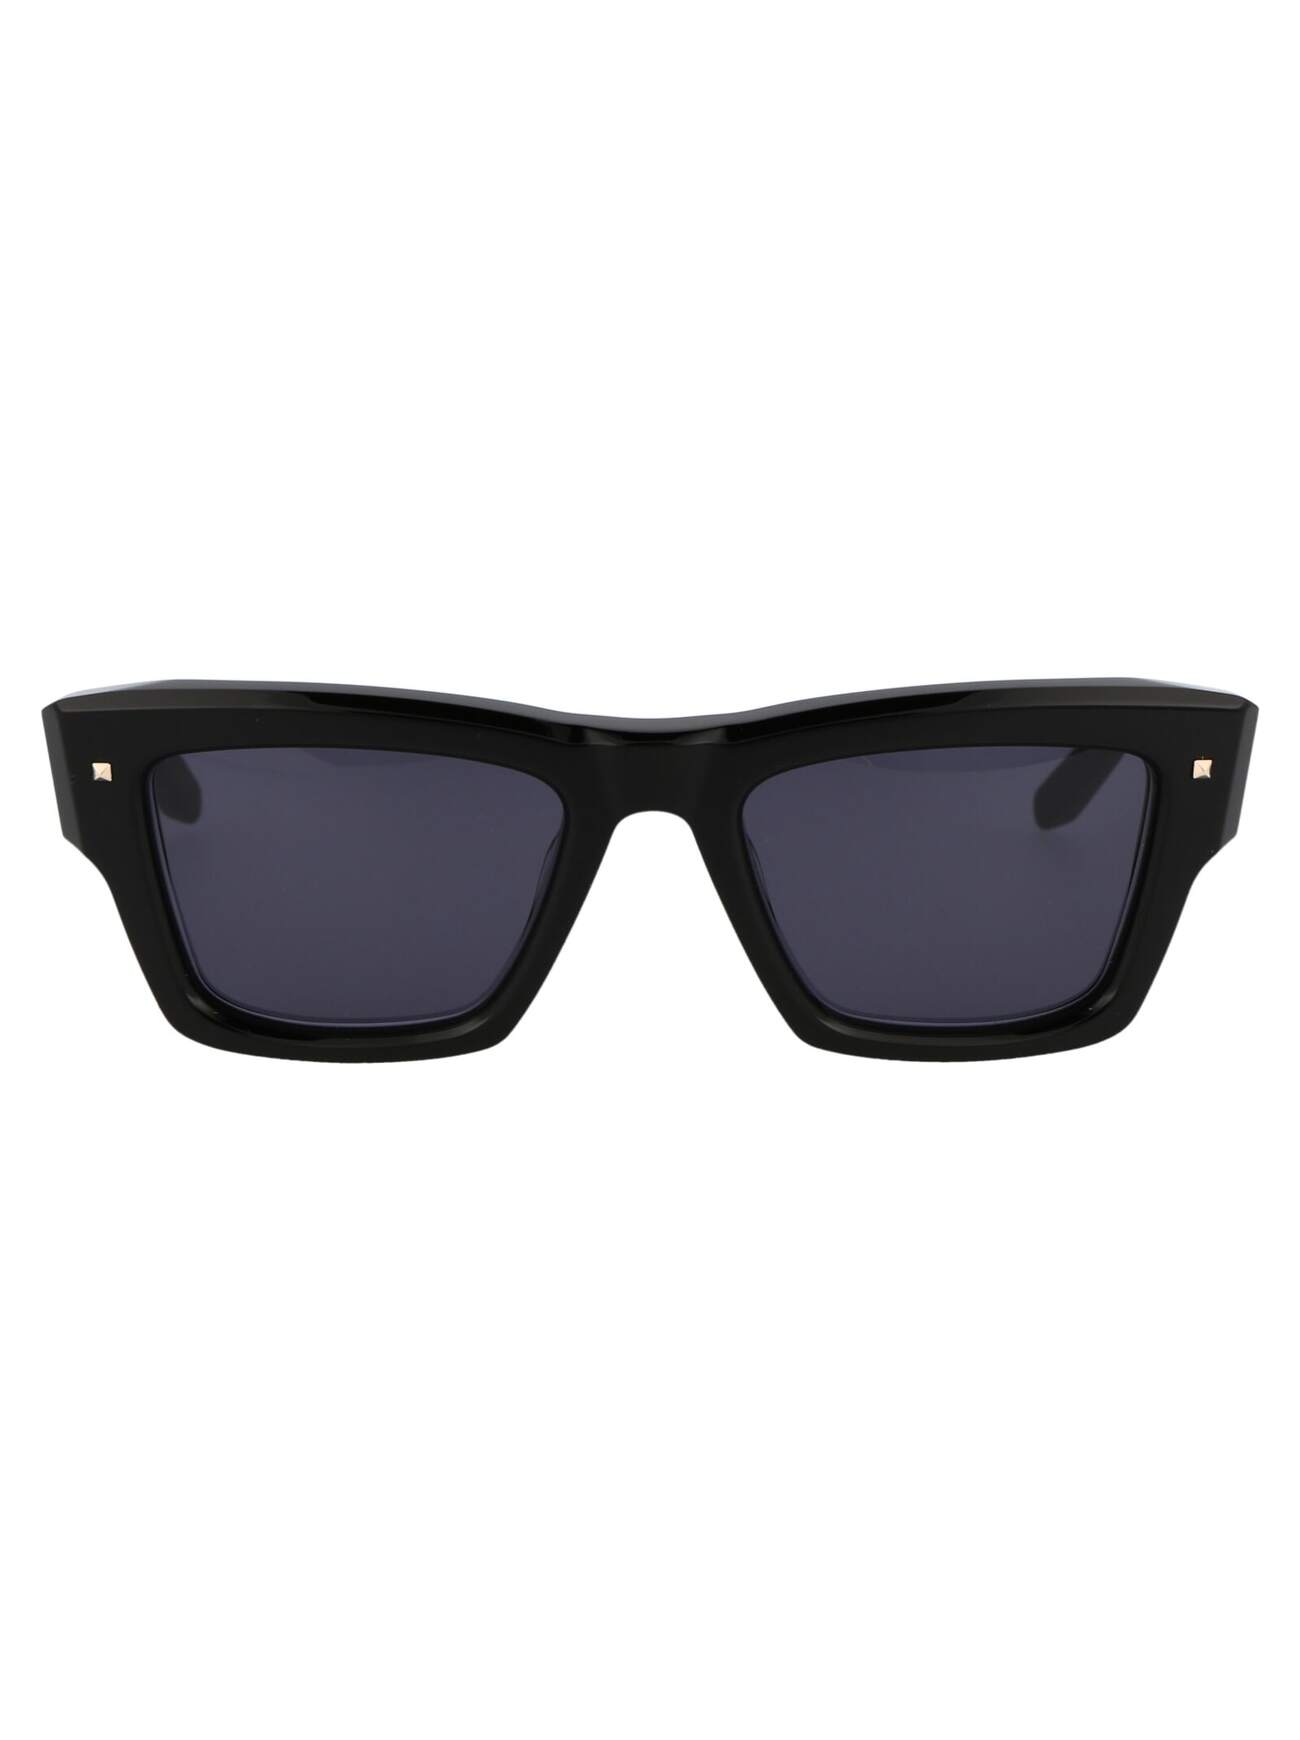 Valentino Eyewear Xxii Sunglasses in black / grey